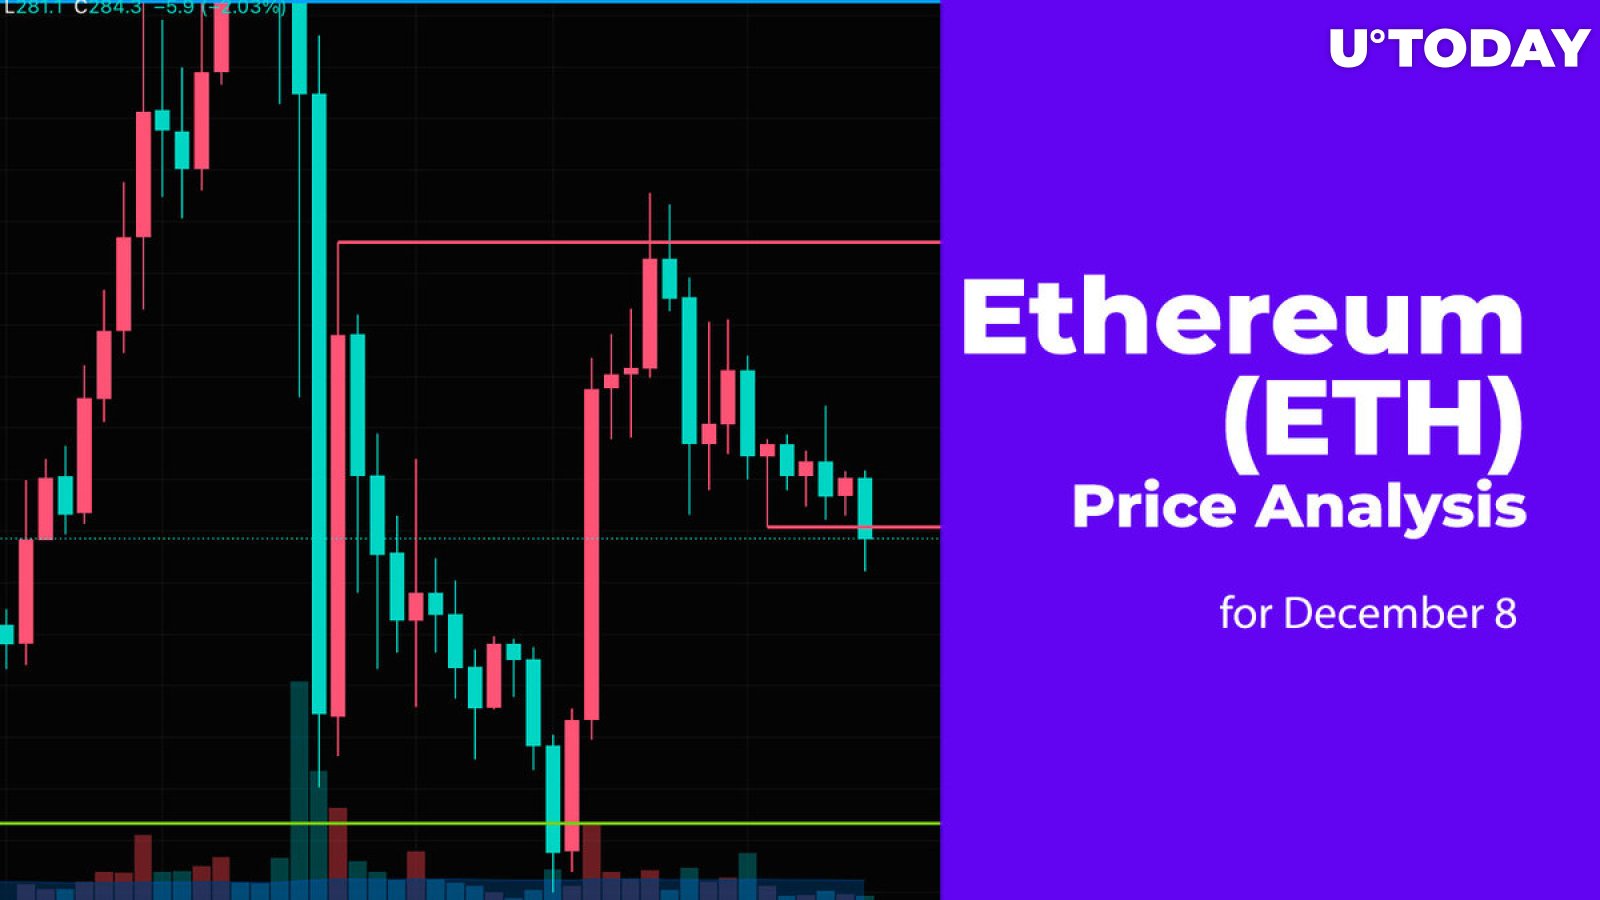 Ethereum (ETH) Price Analysis for December 8